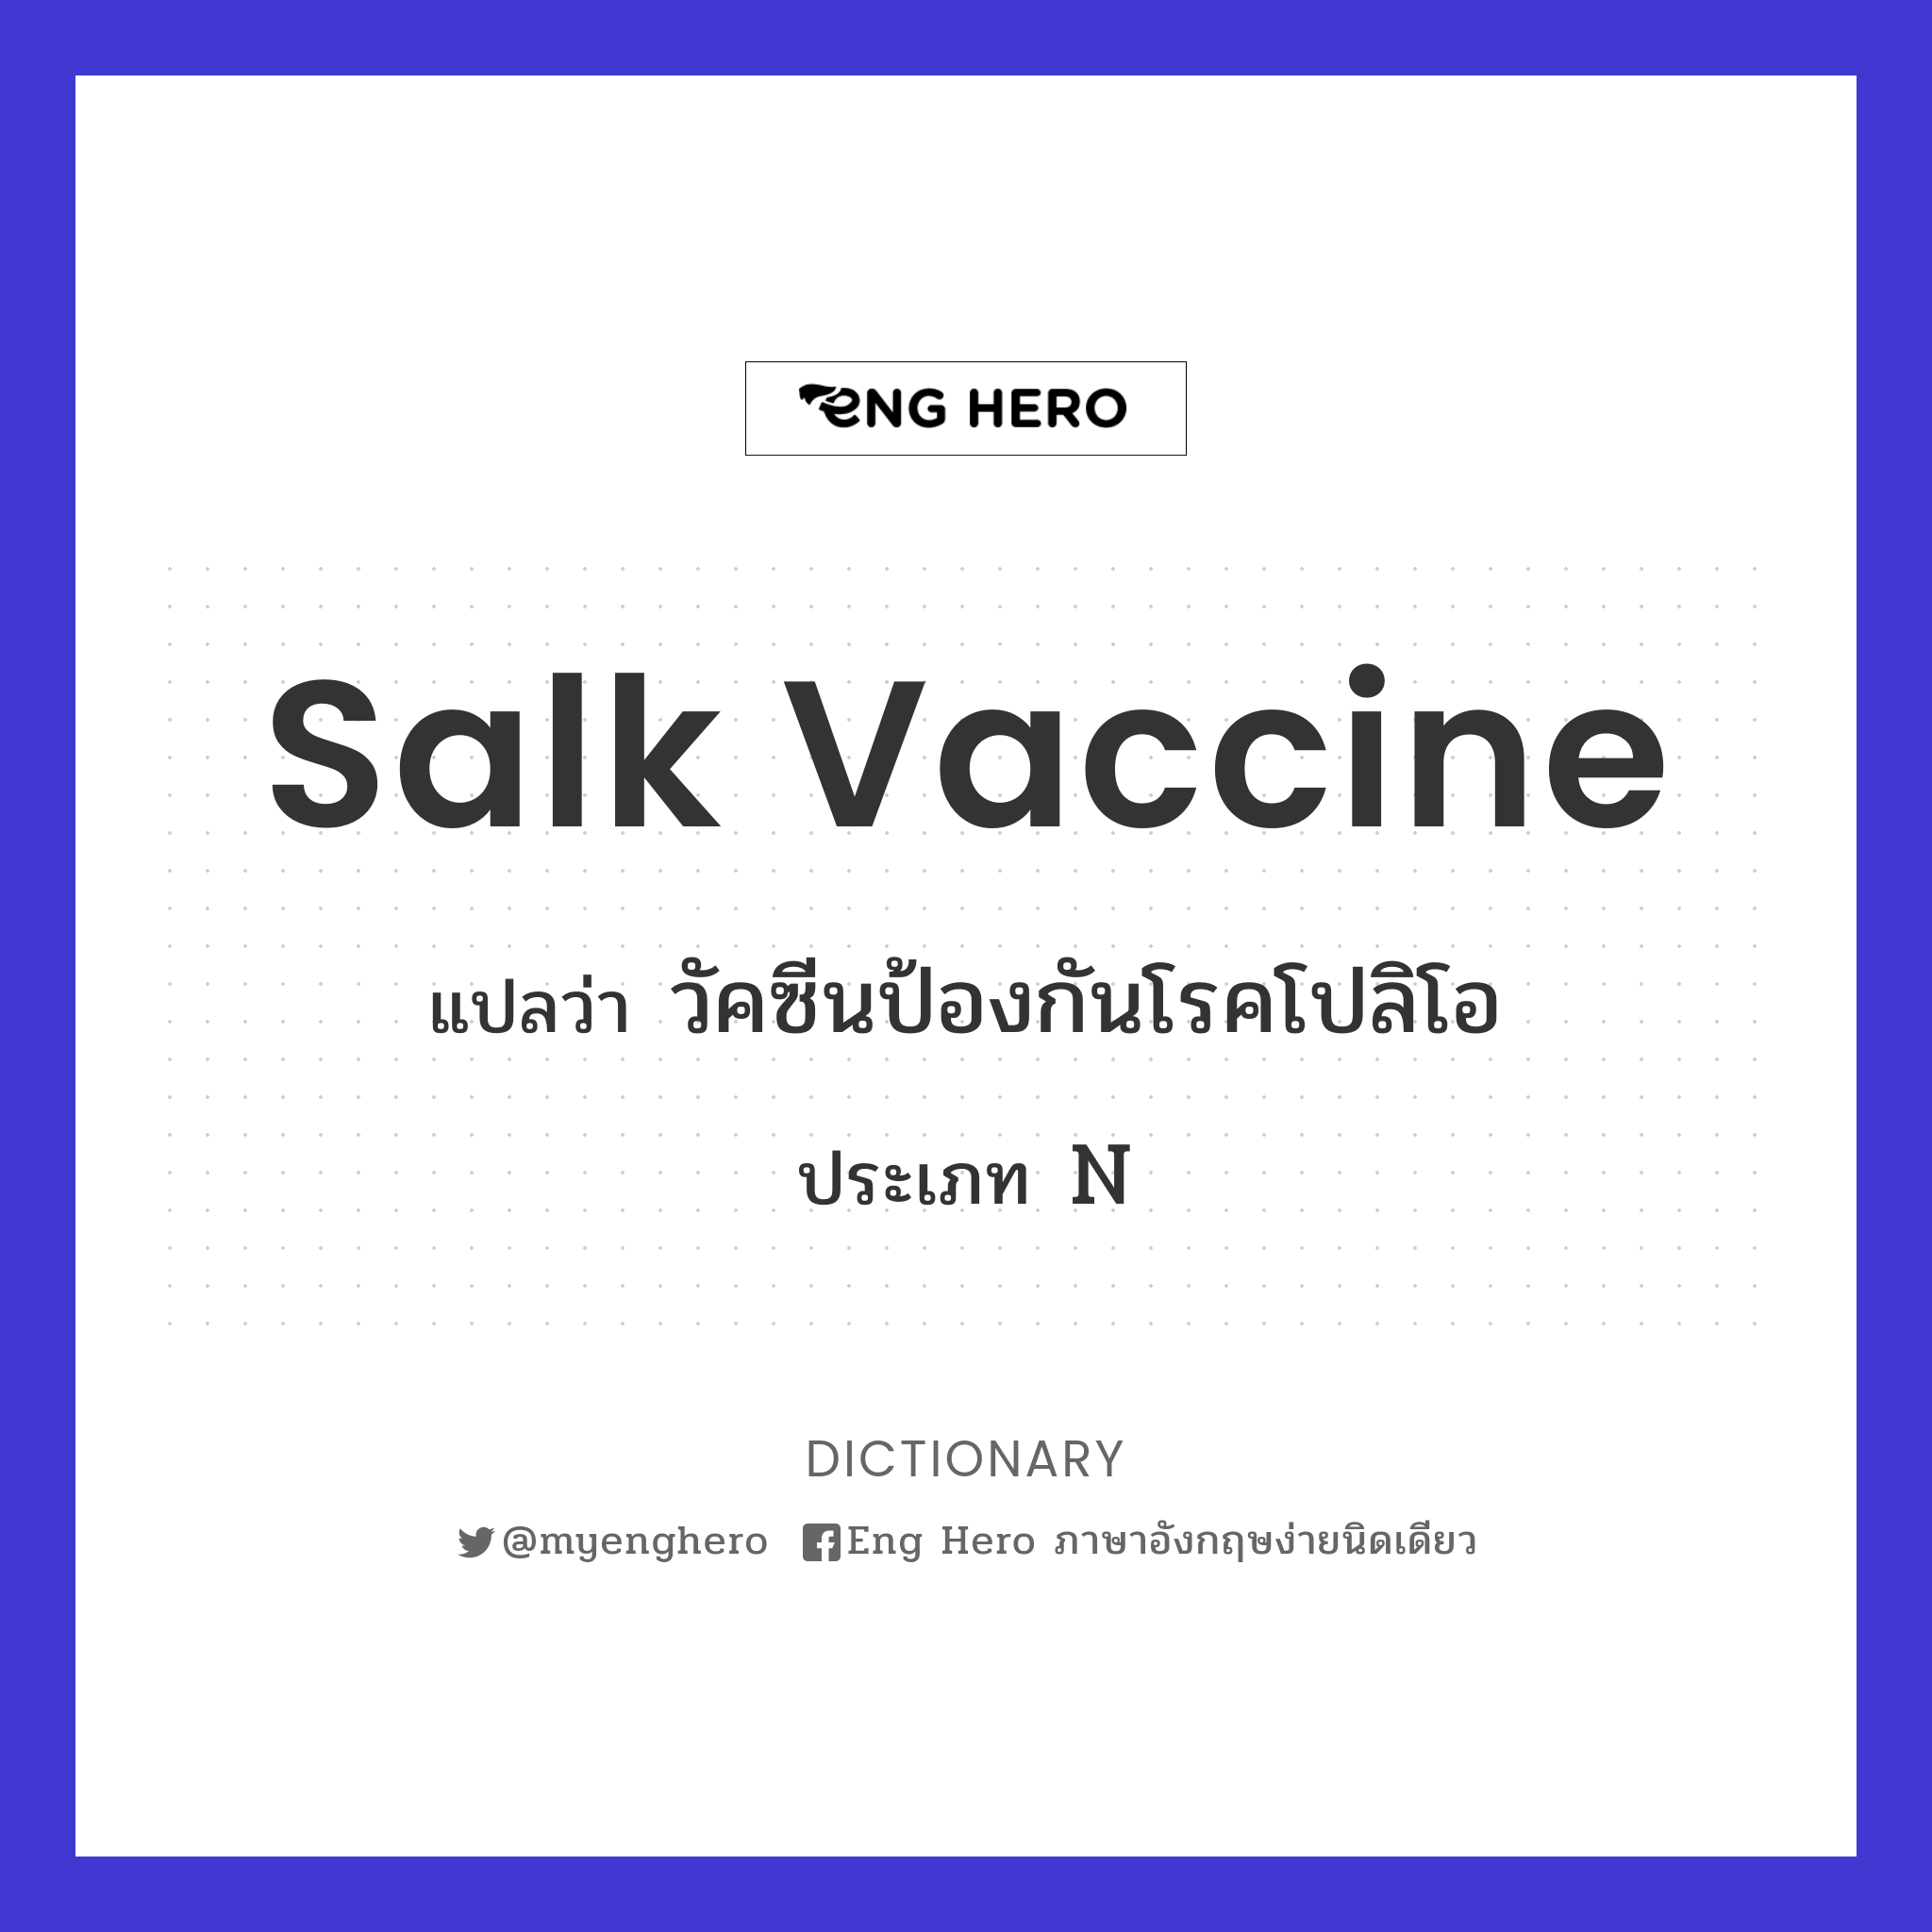 Salk vaccine